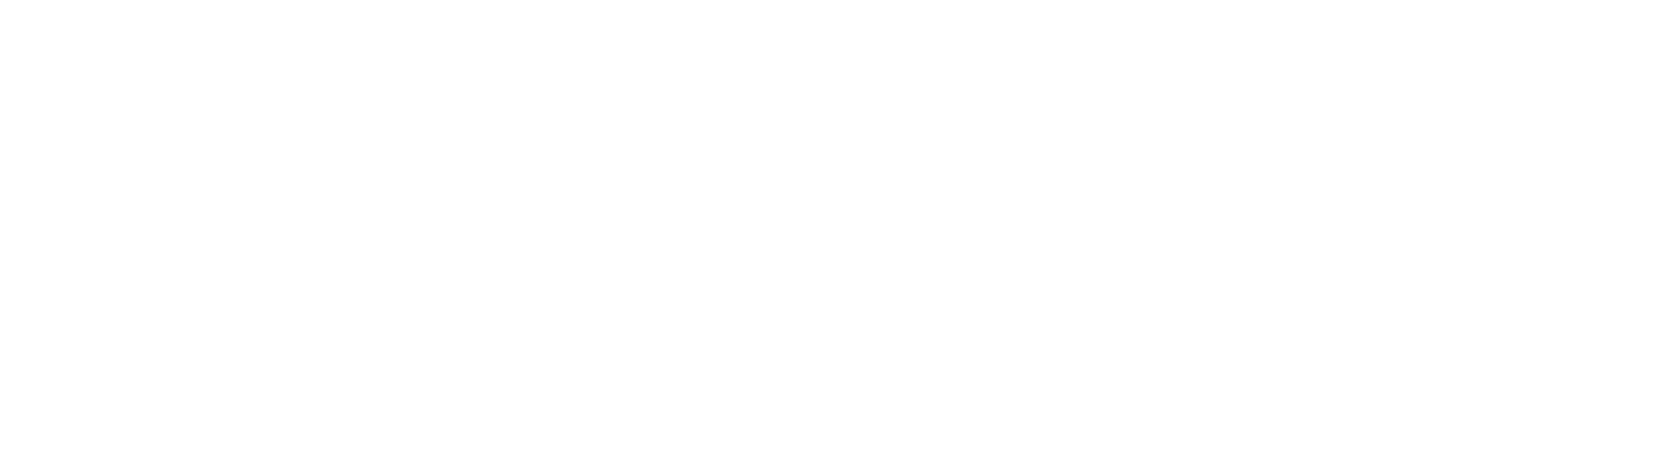 clerkenwell design trail logo 